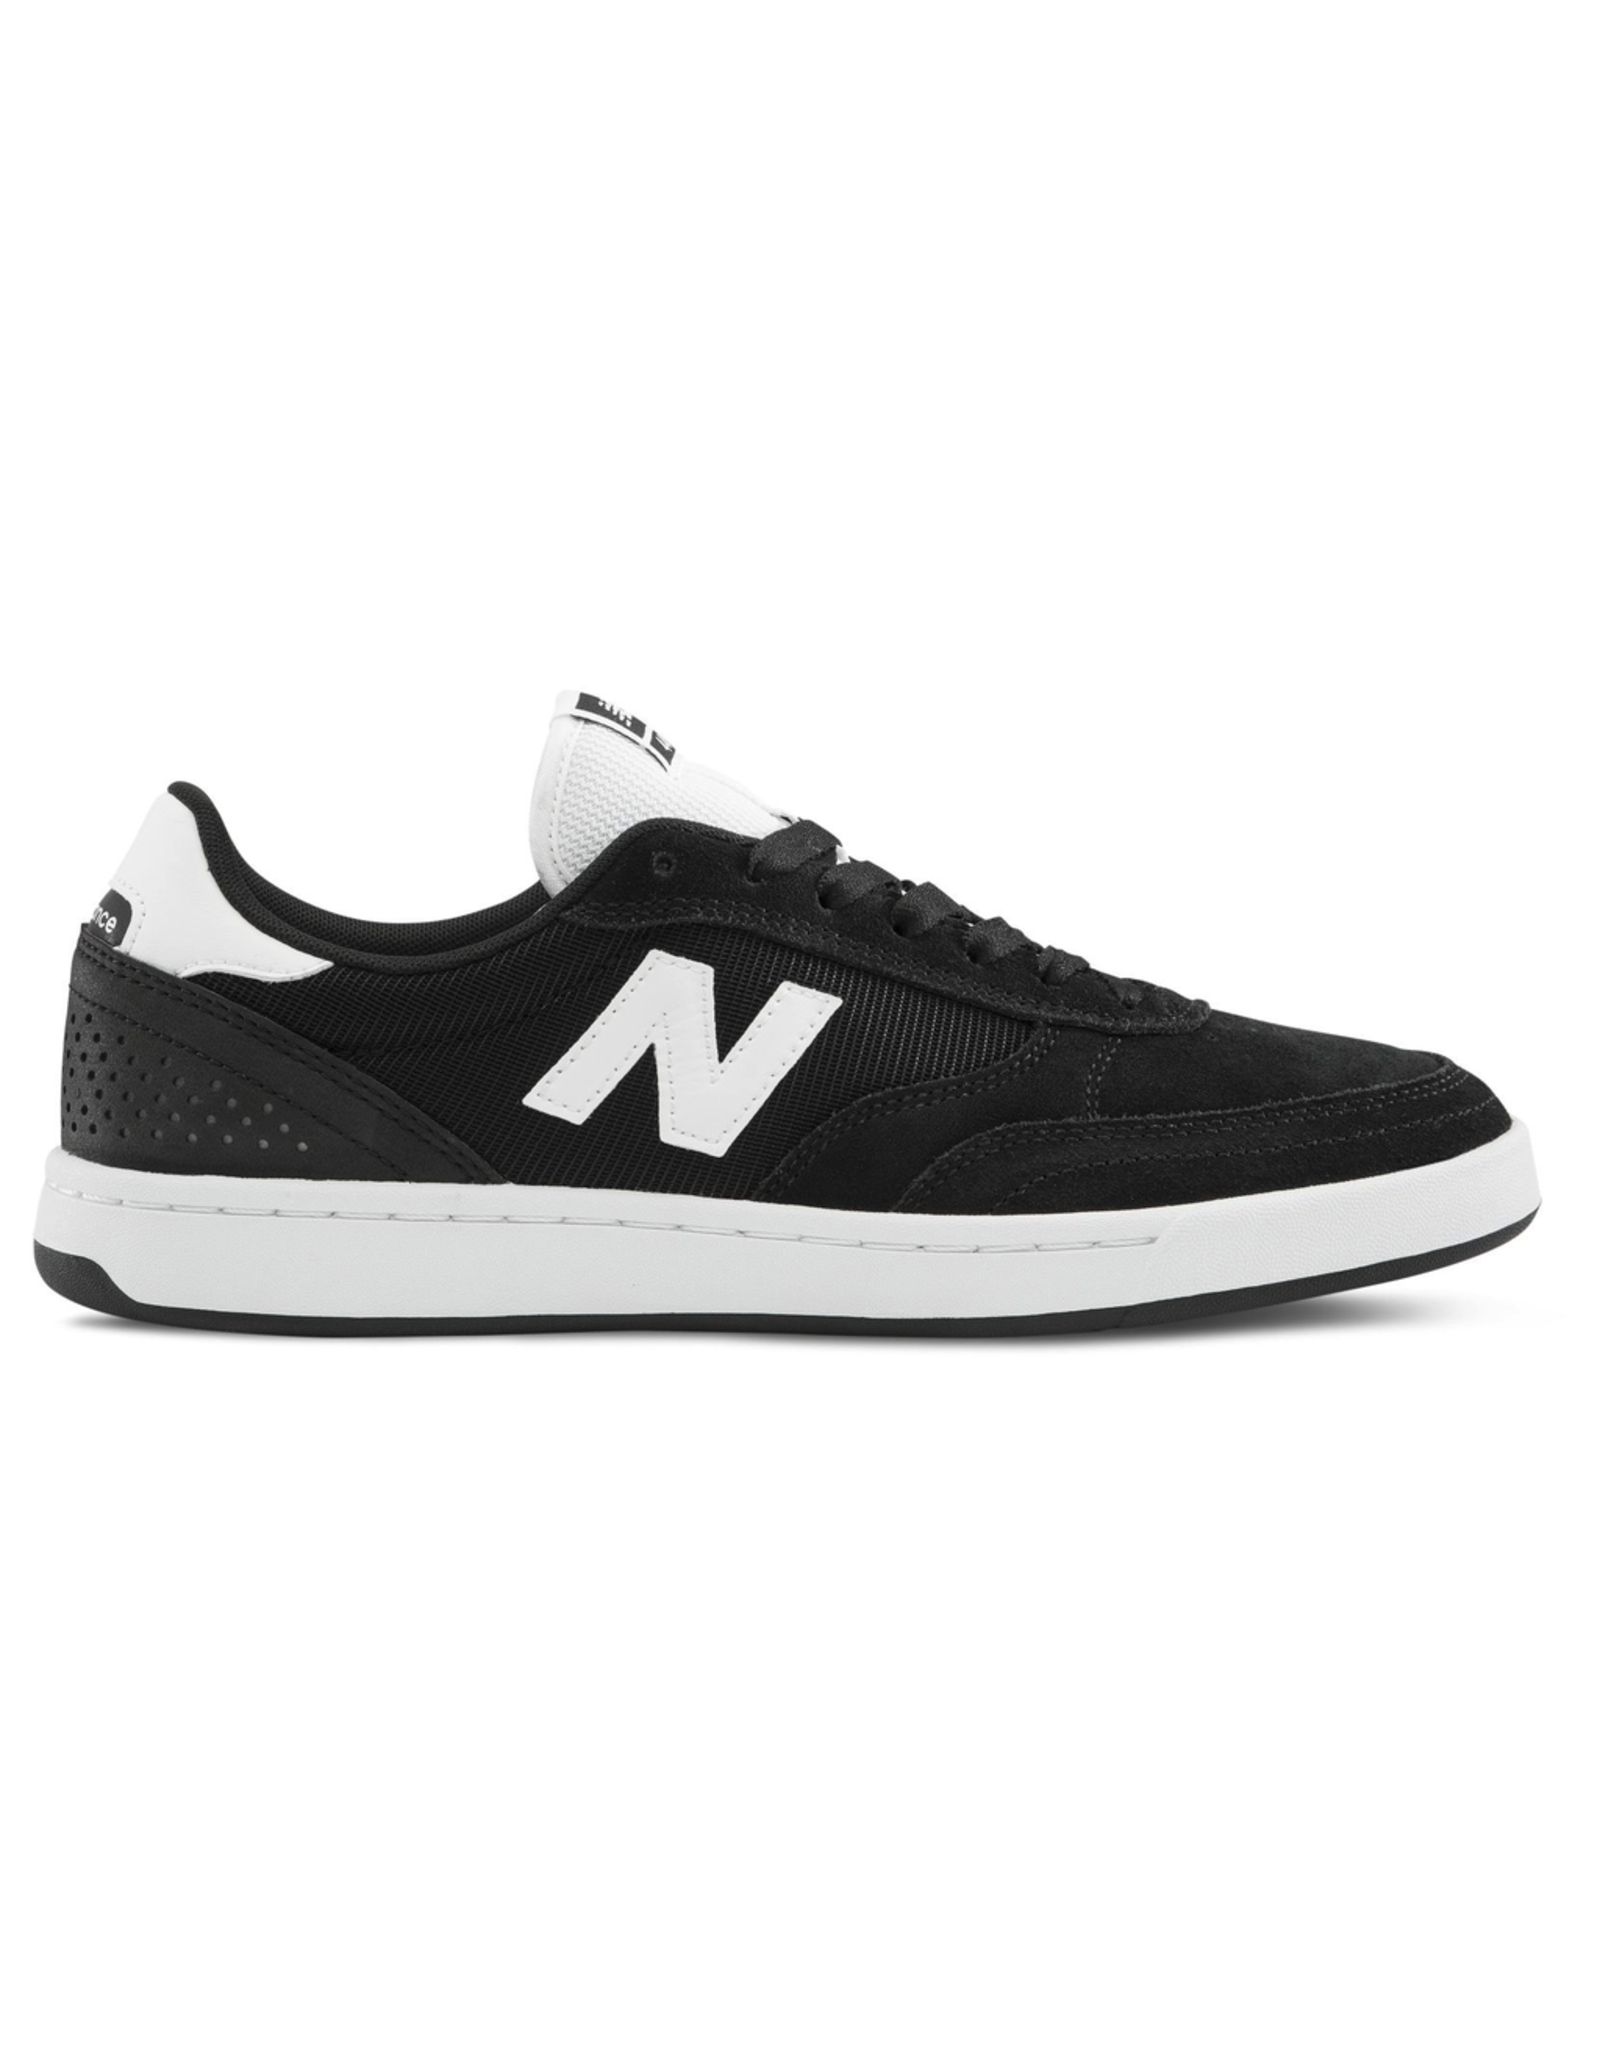 NB 440 Black/White - Palm Isle Skateshop